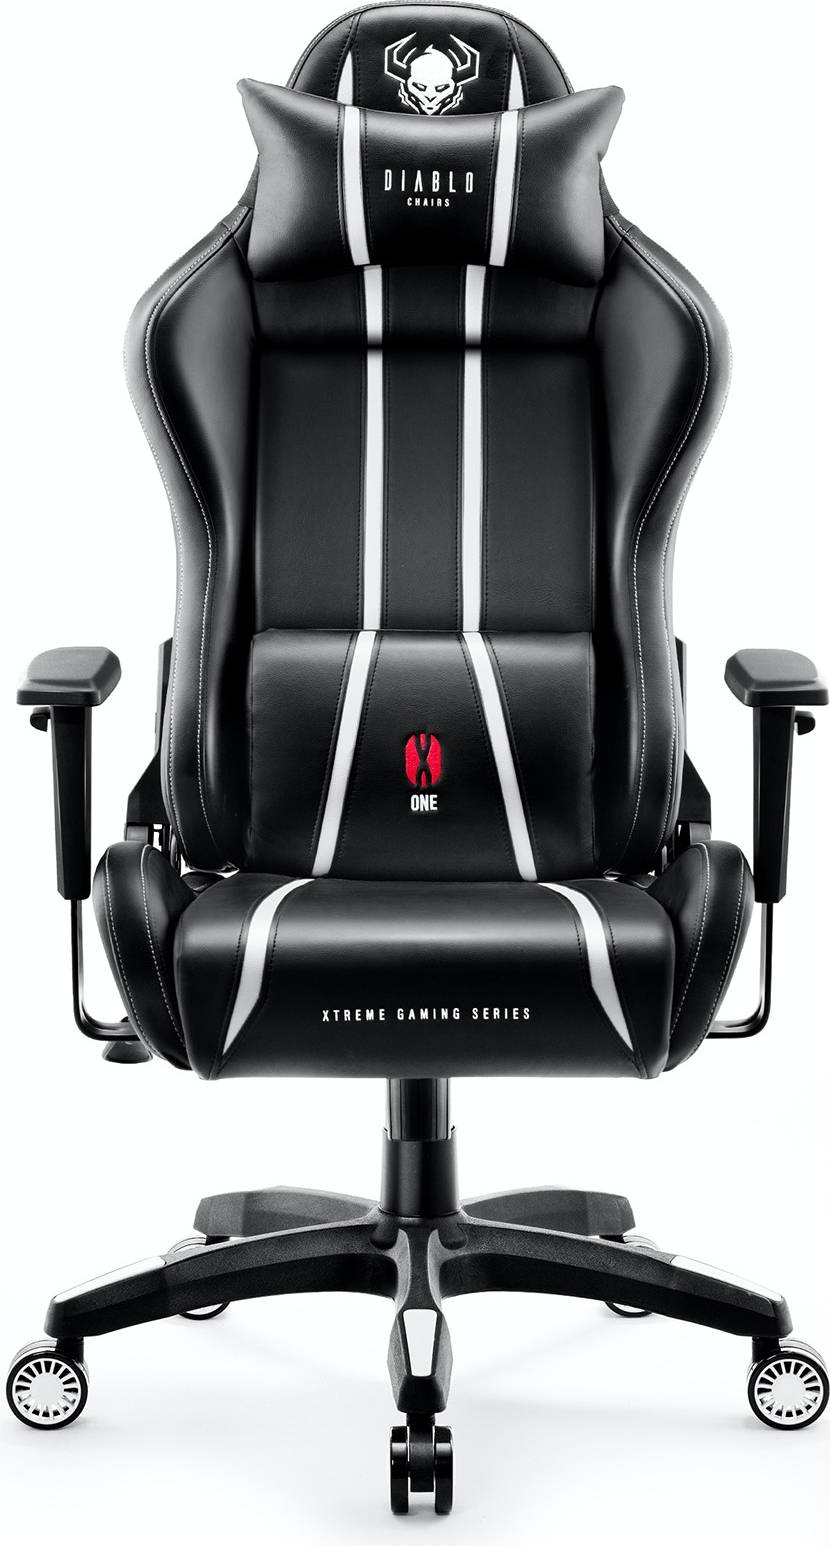  Bild på Diablo X-One 2.0 Normal Size Gaming Chair - Black/White gamingstol